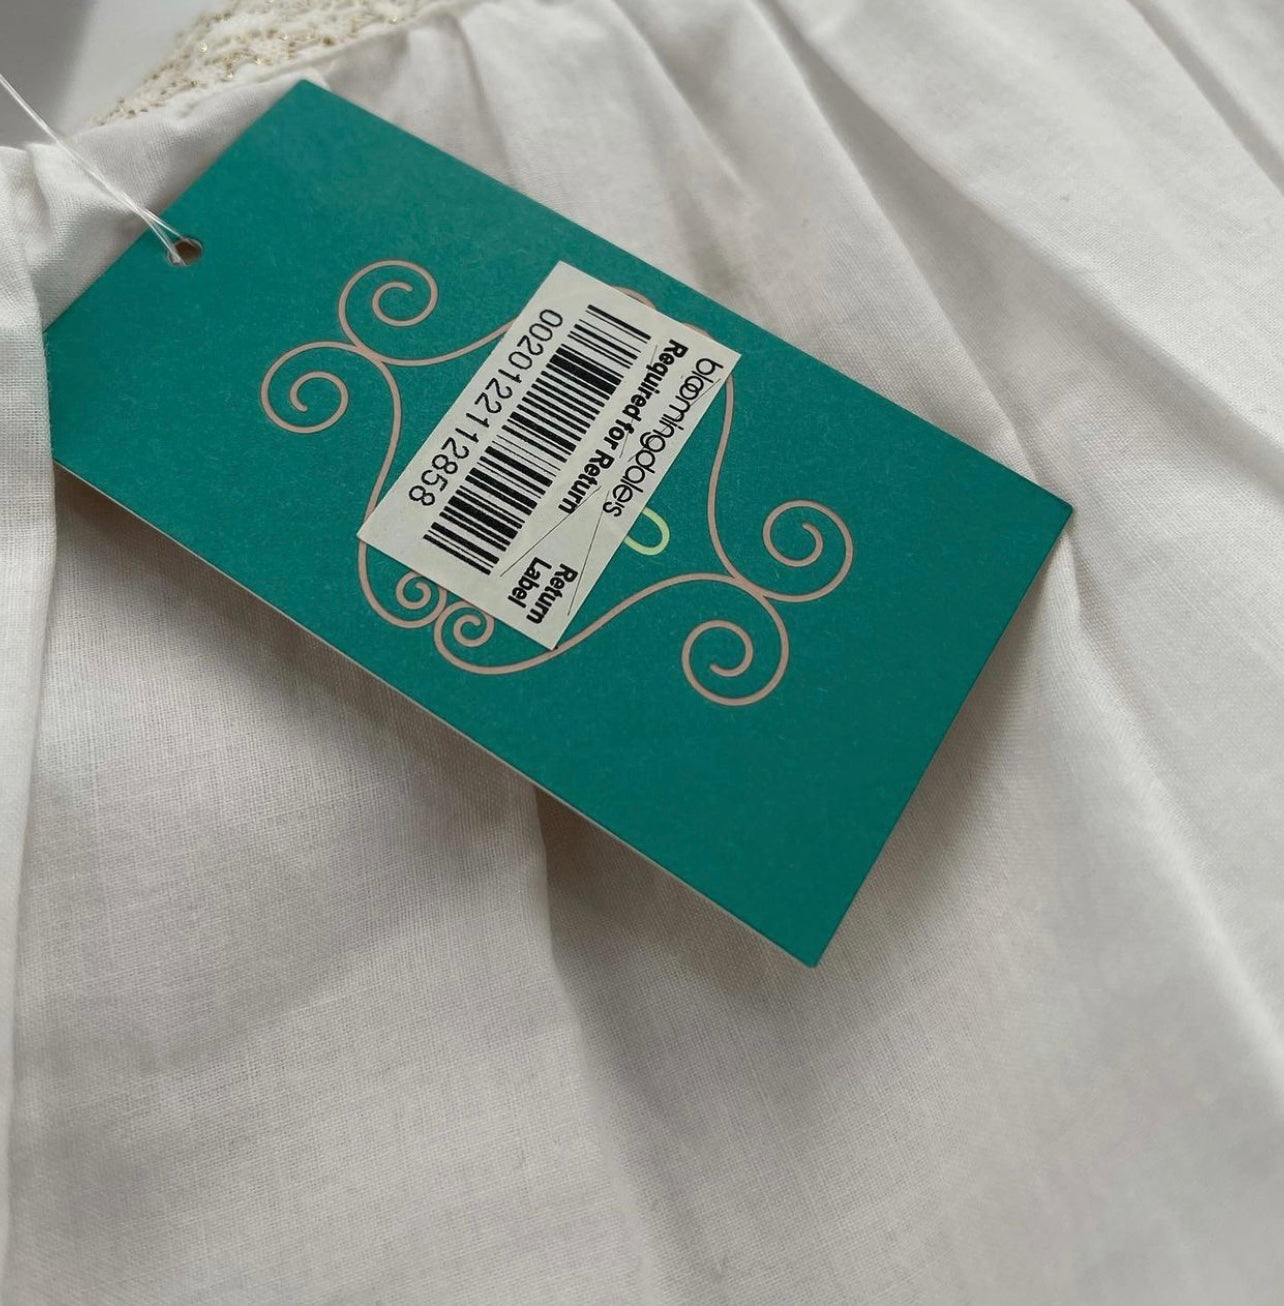 Bloomingdales  - Aqua White Cotton Skirt with Horizontal Ribbon Pattern (Size Small)